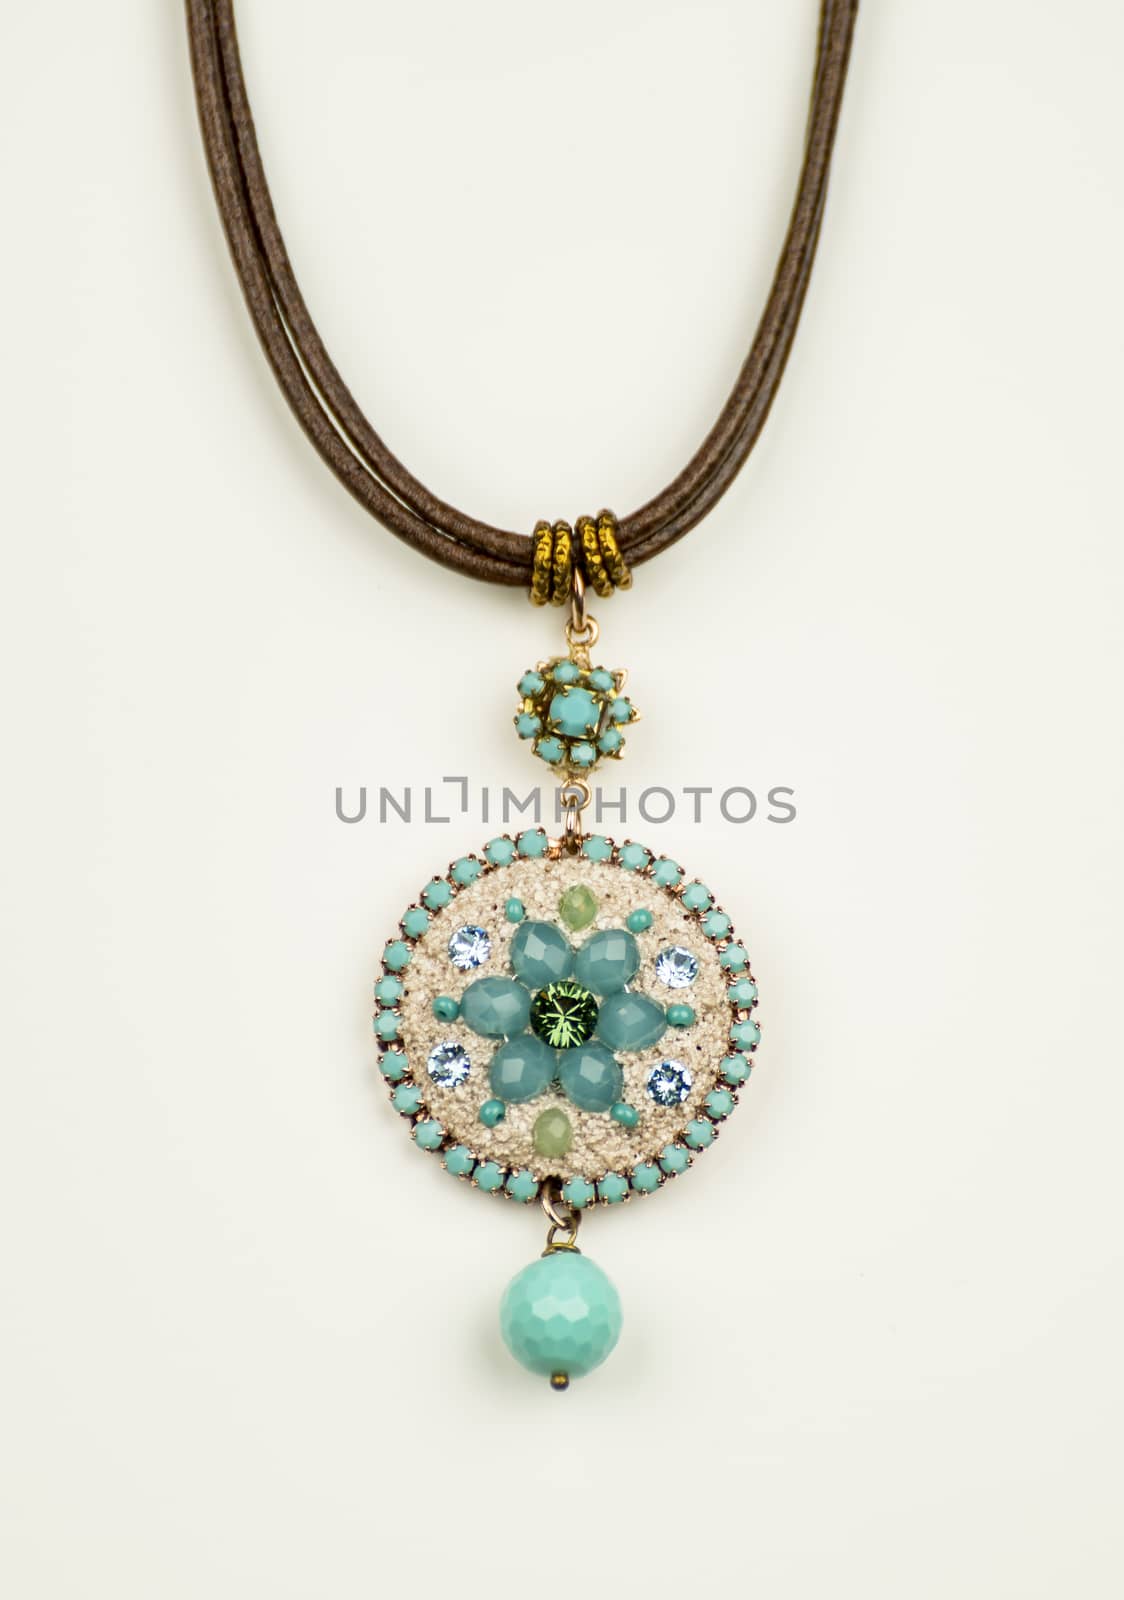 shiny vintage jewelry by edella